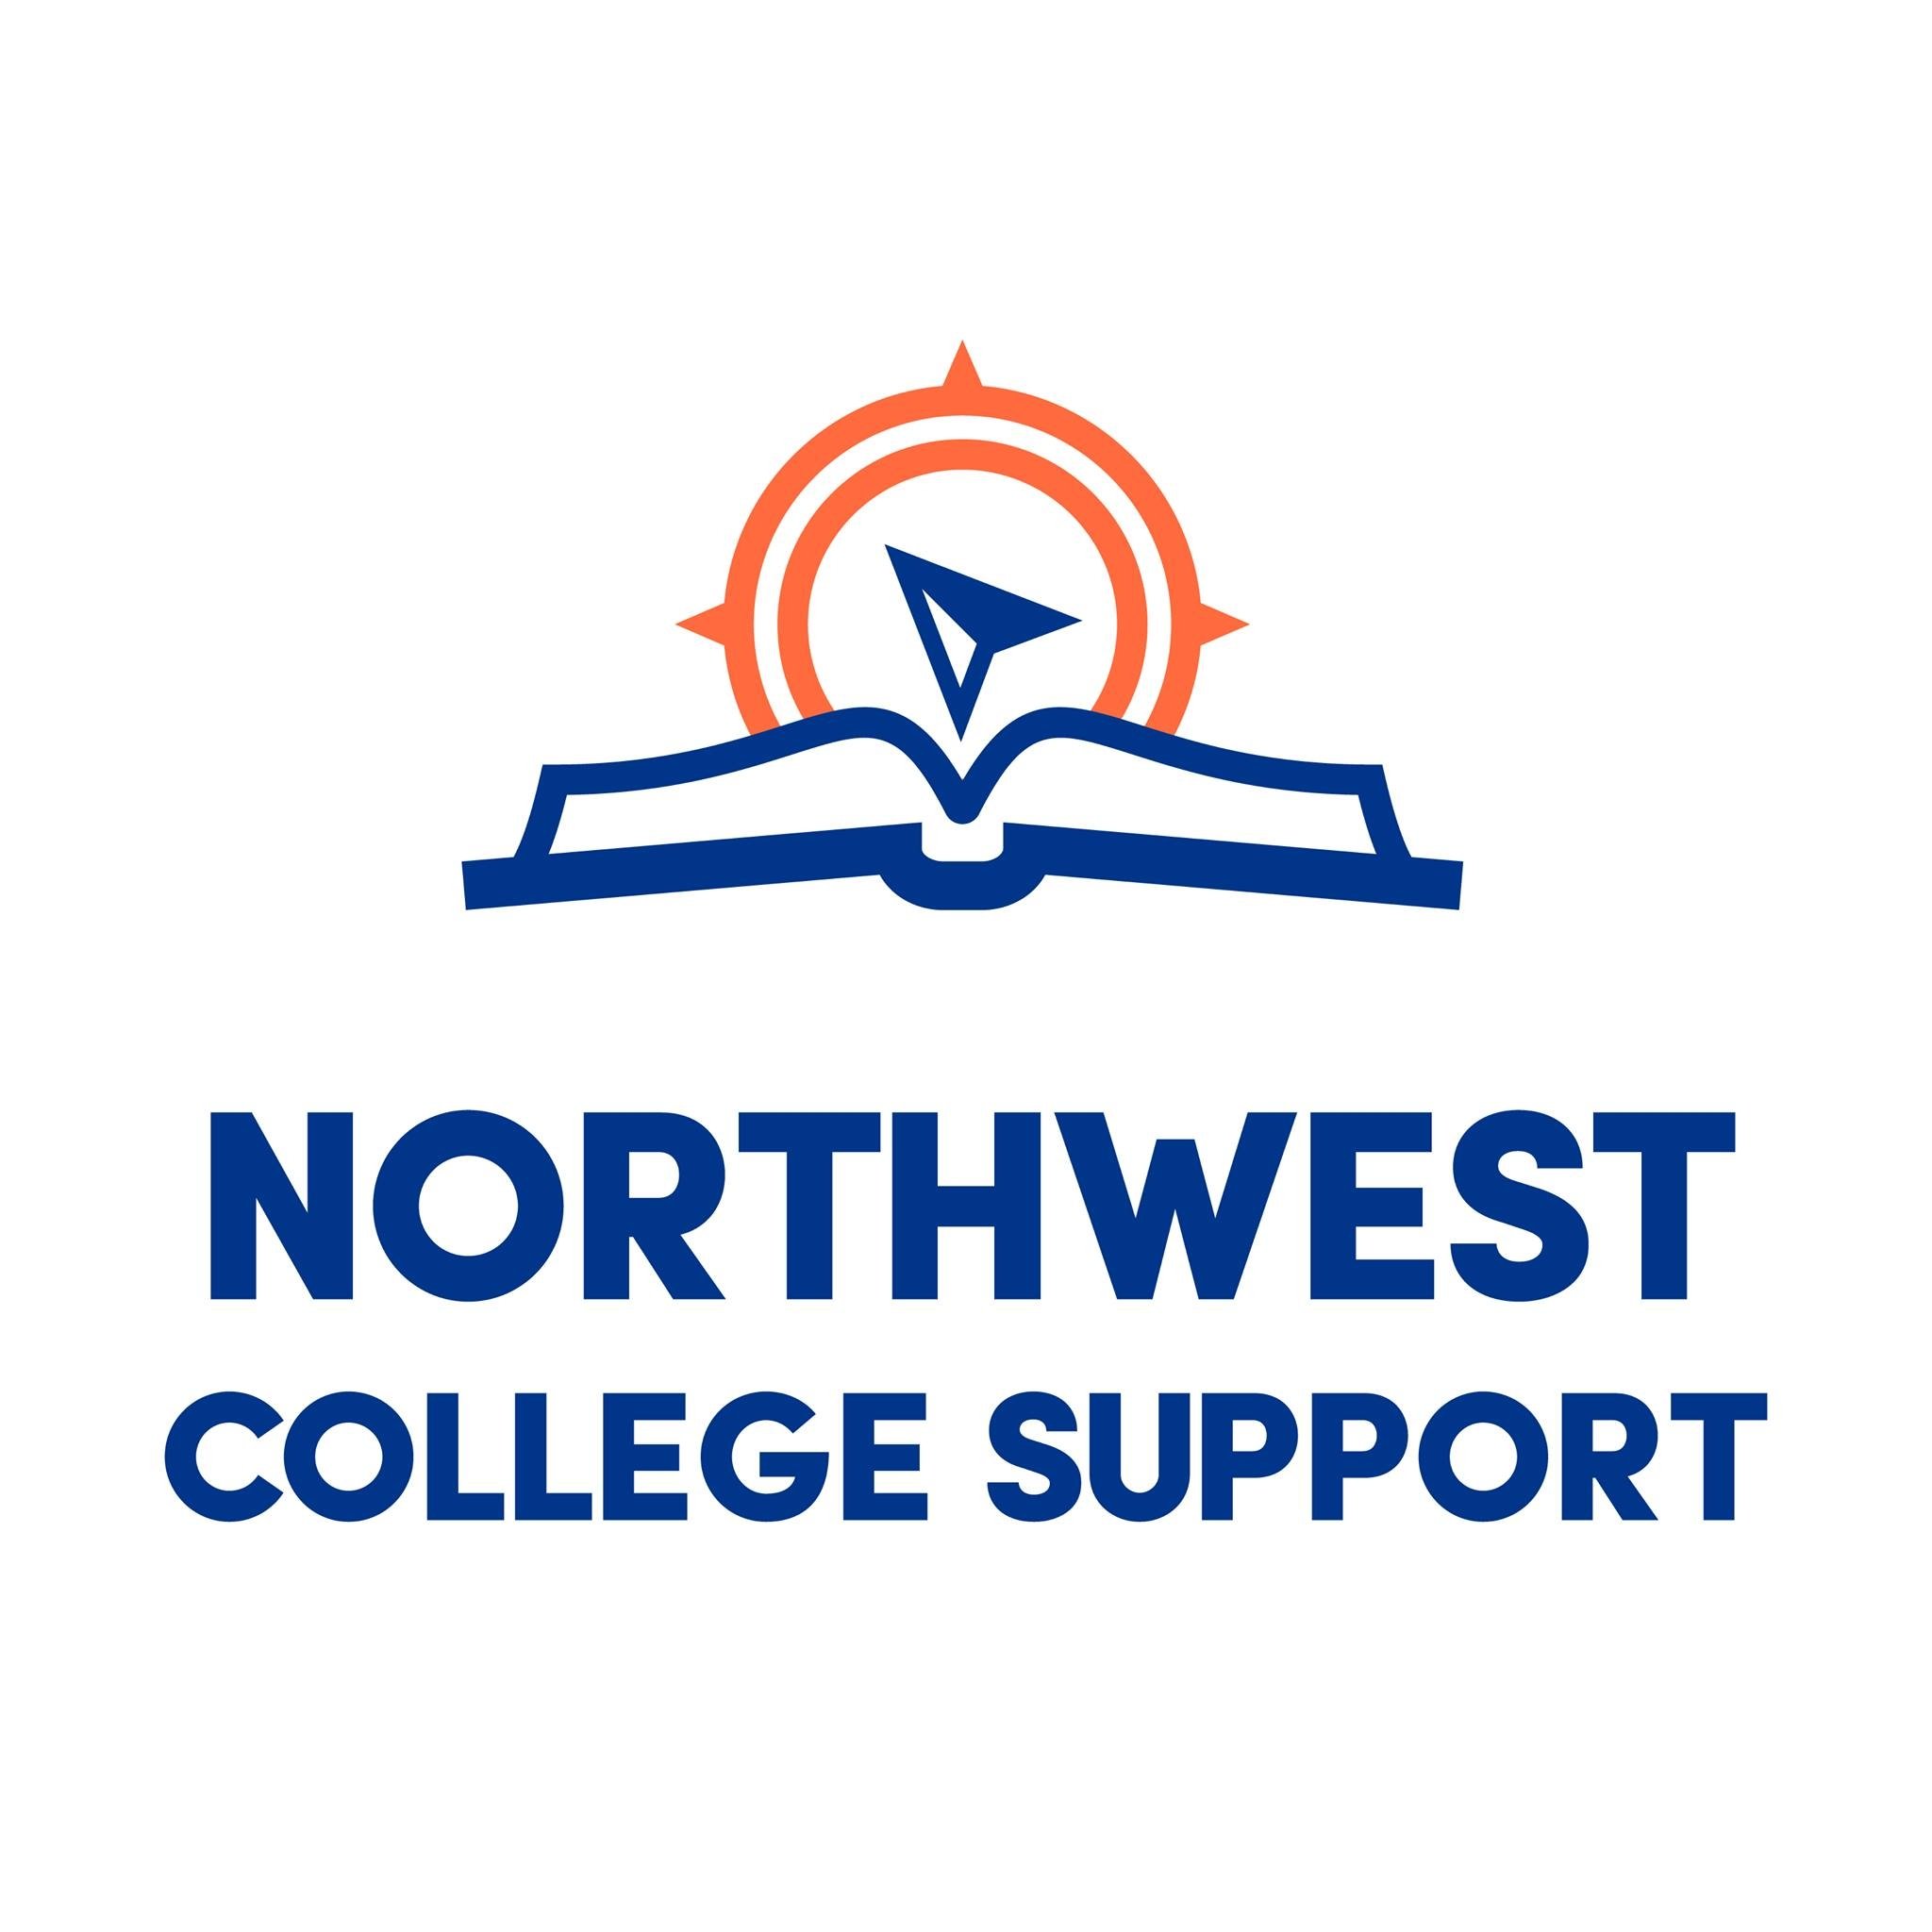 Northwest College Support (Copy)